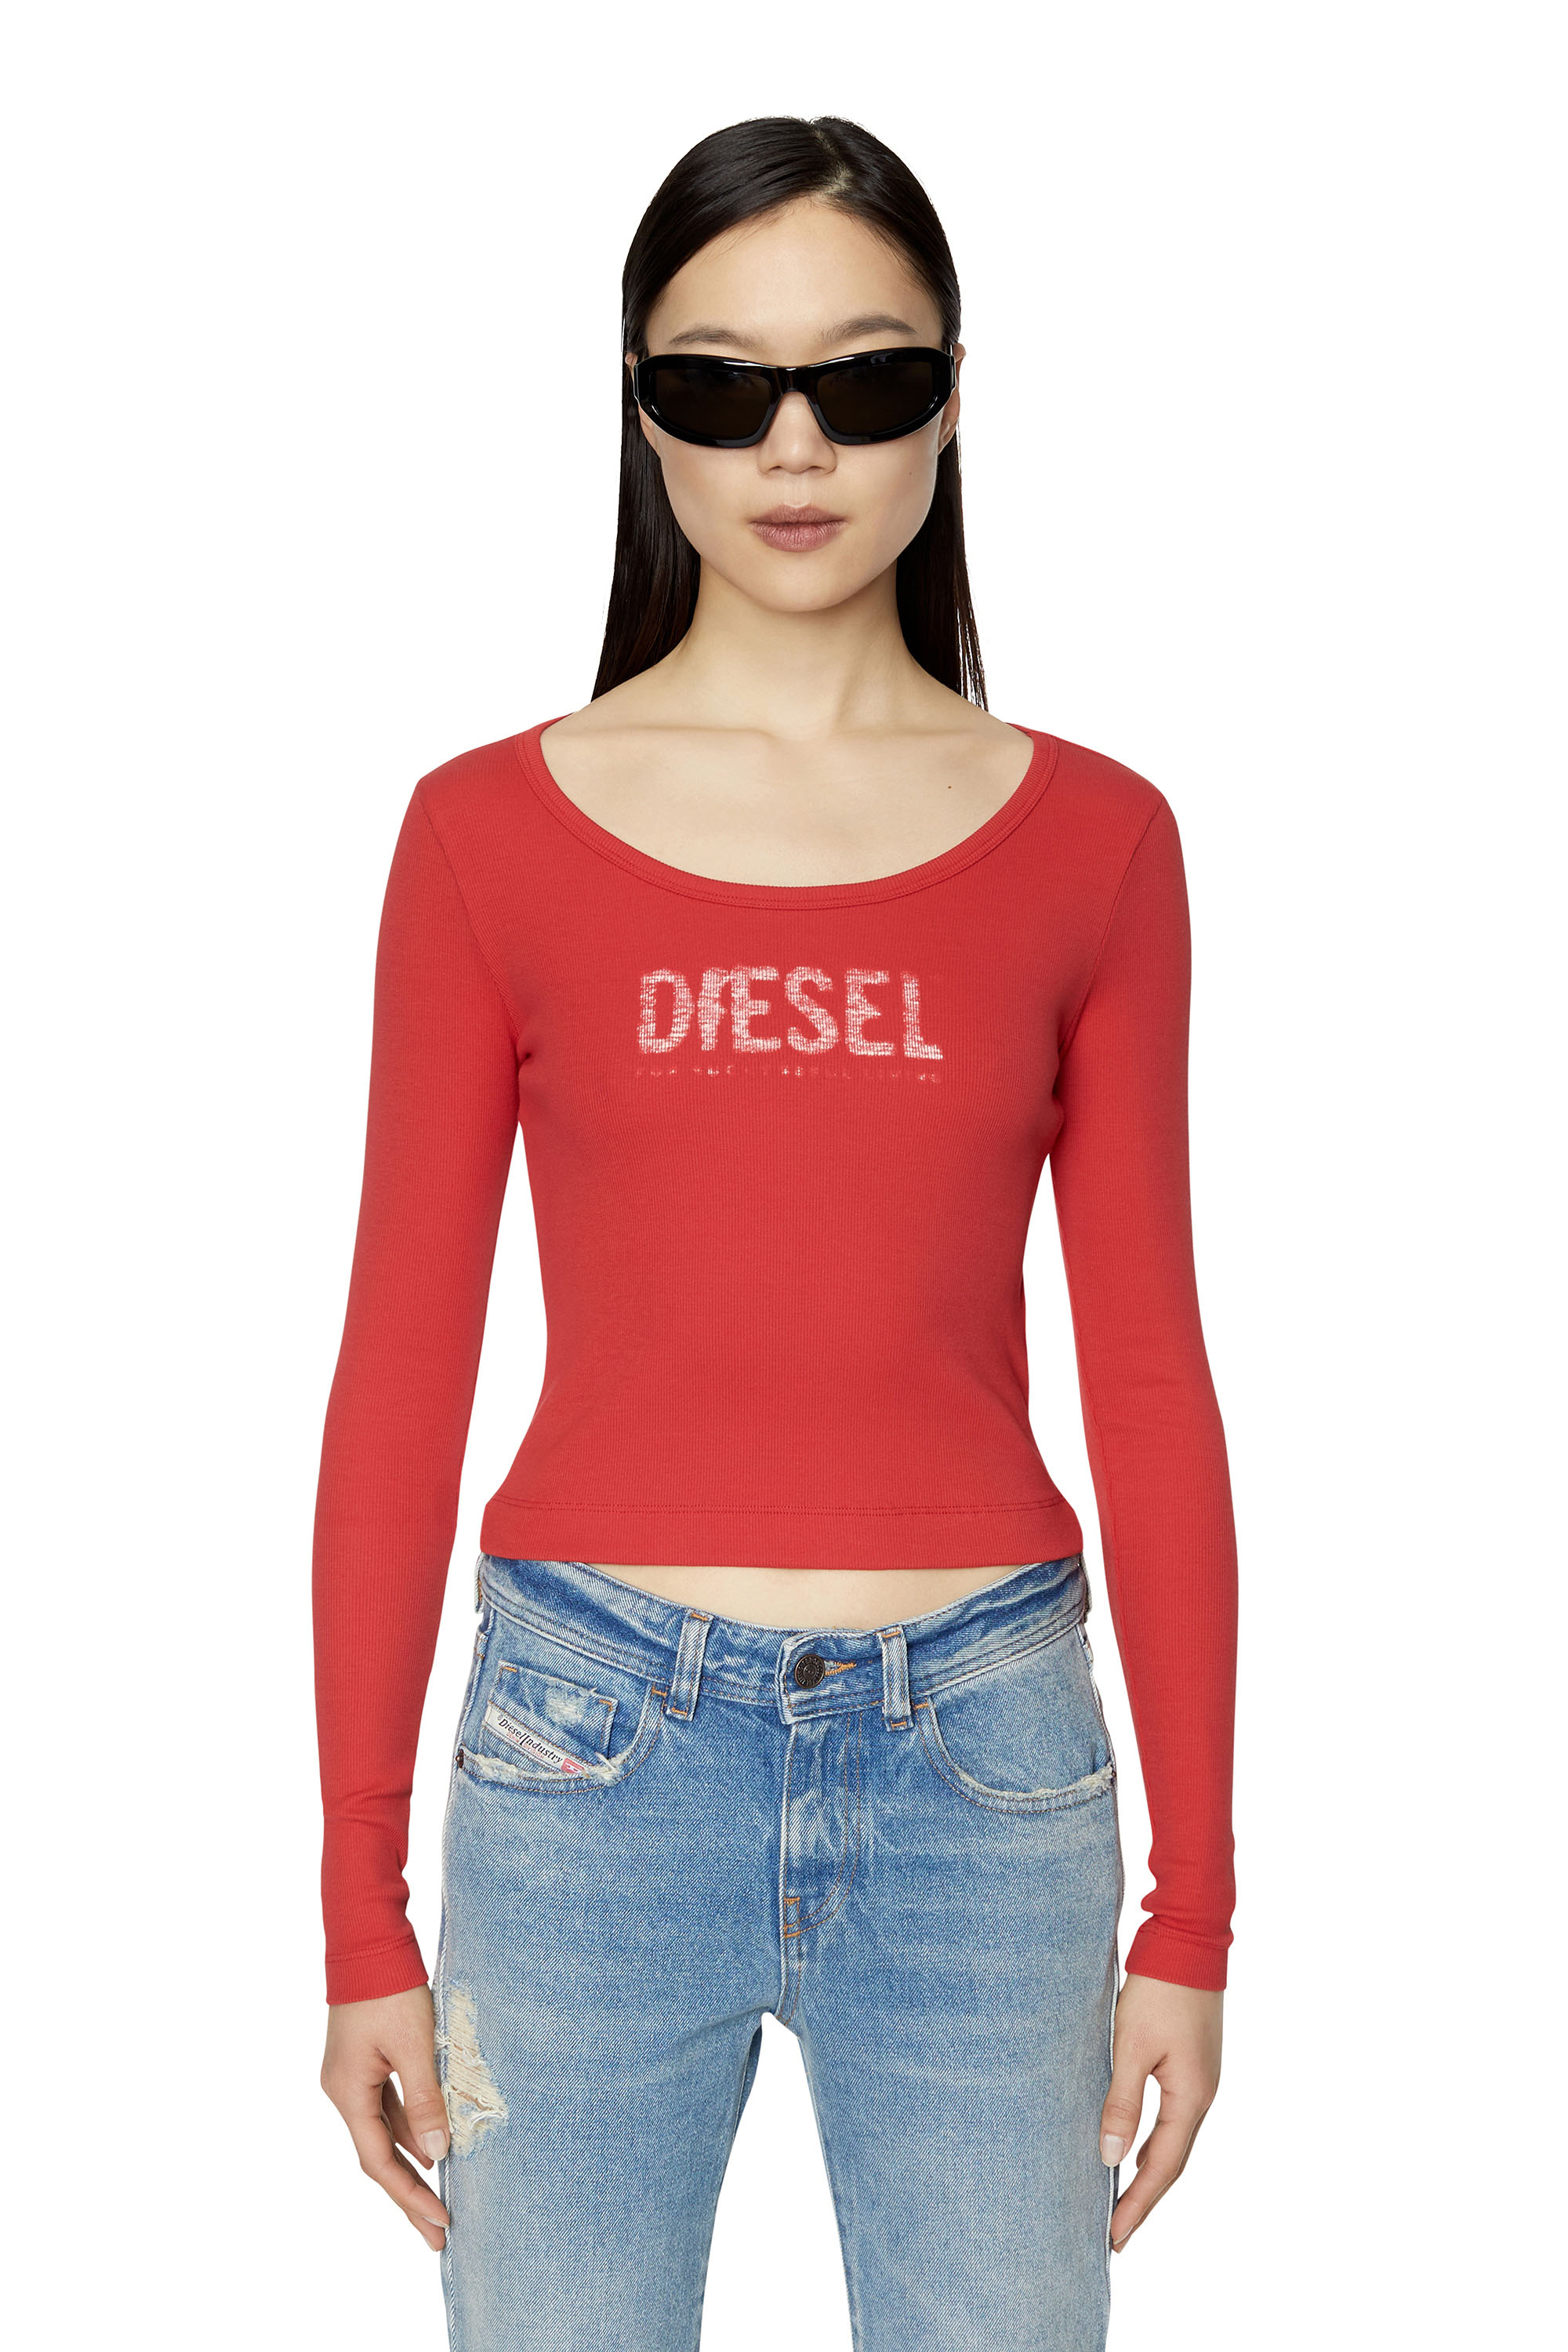 Diesel - T-BALLET-E1, Rojo - Image 2